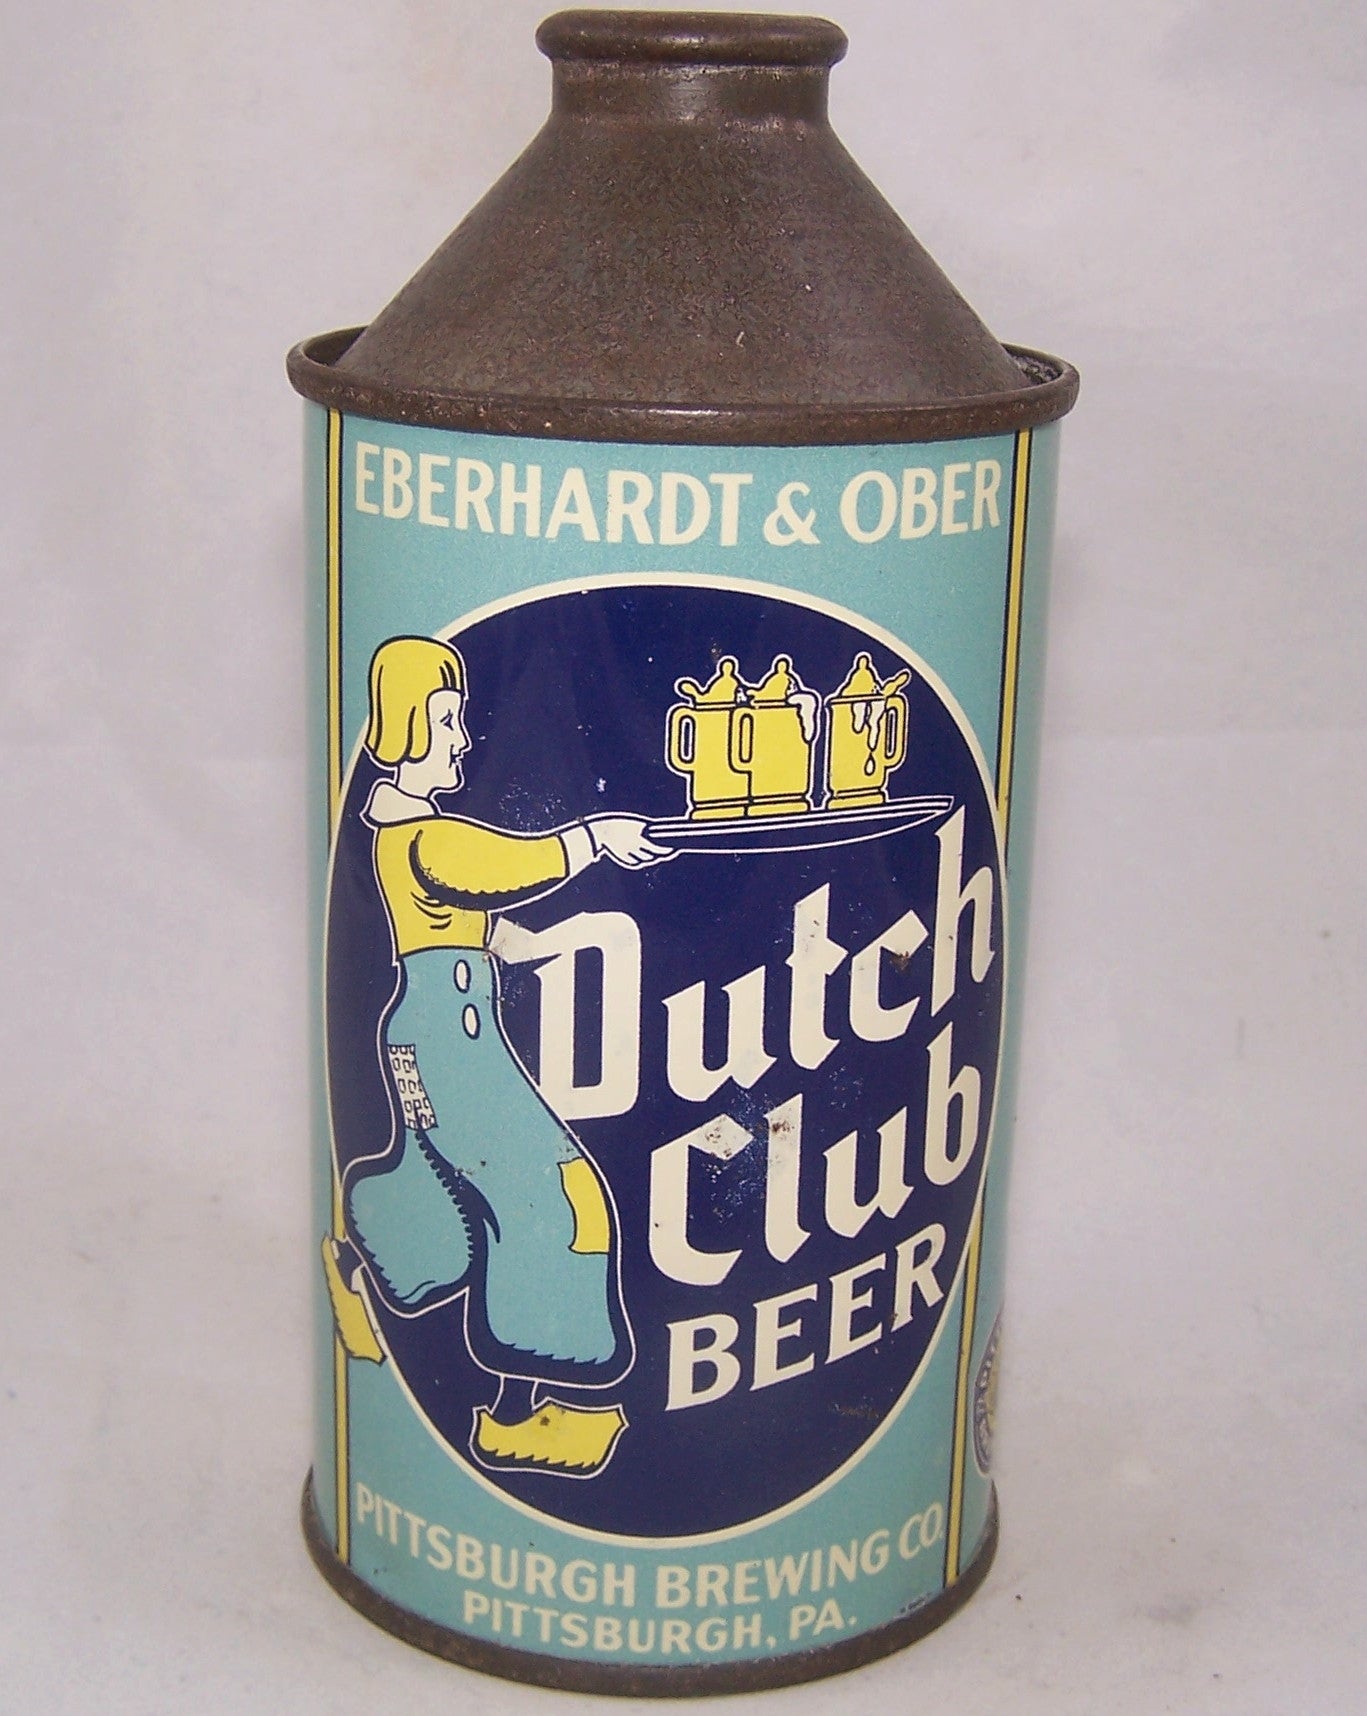 Dutch Club Beer, USBC 160-06, Grade 1. Sold on 03/30/18